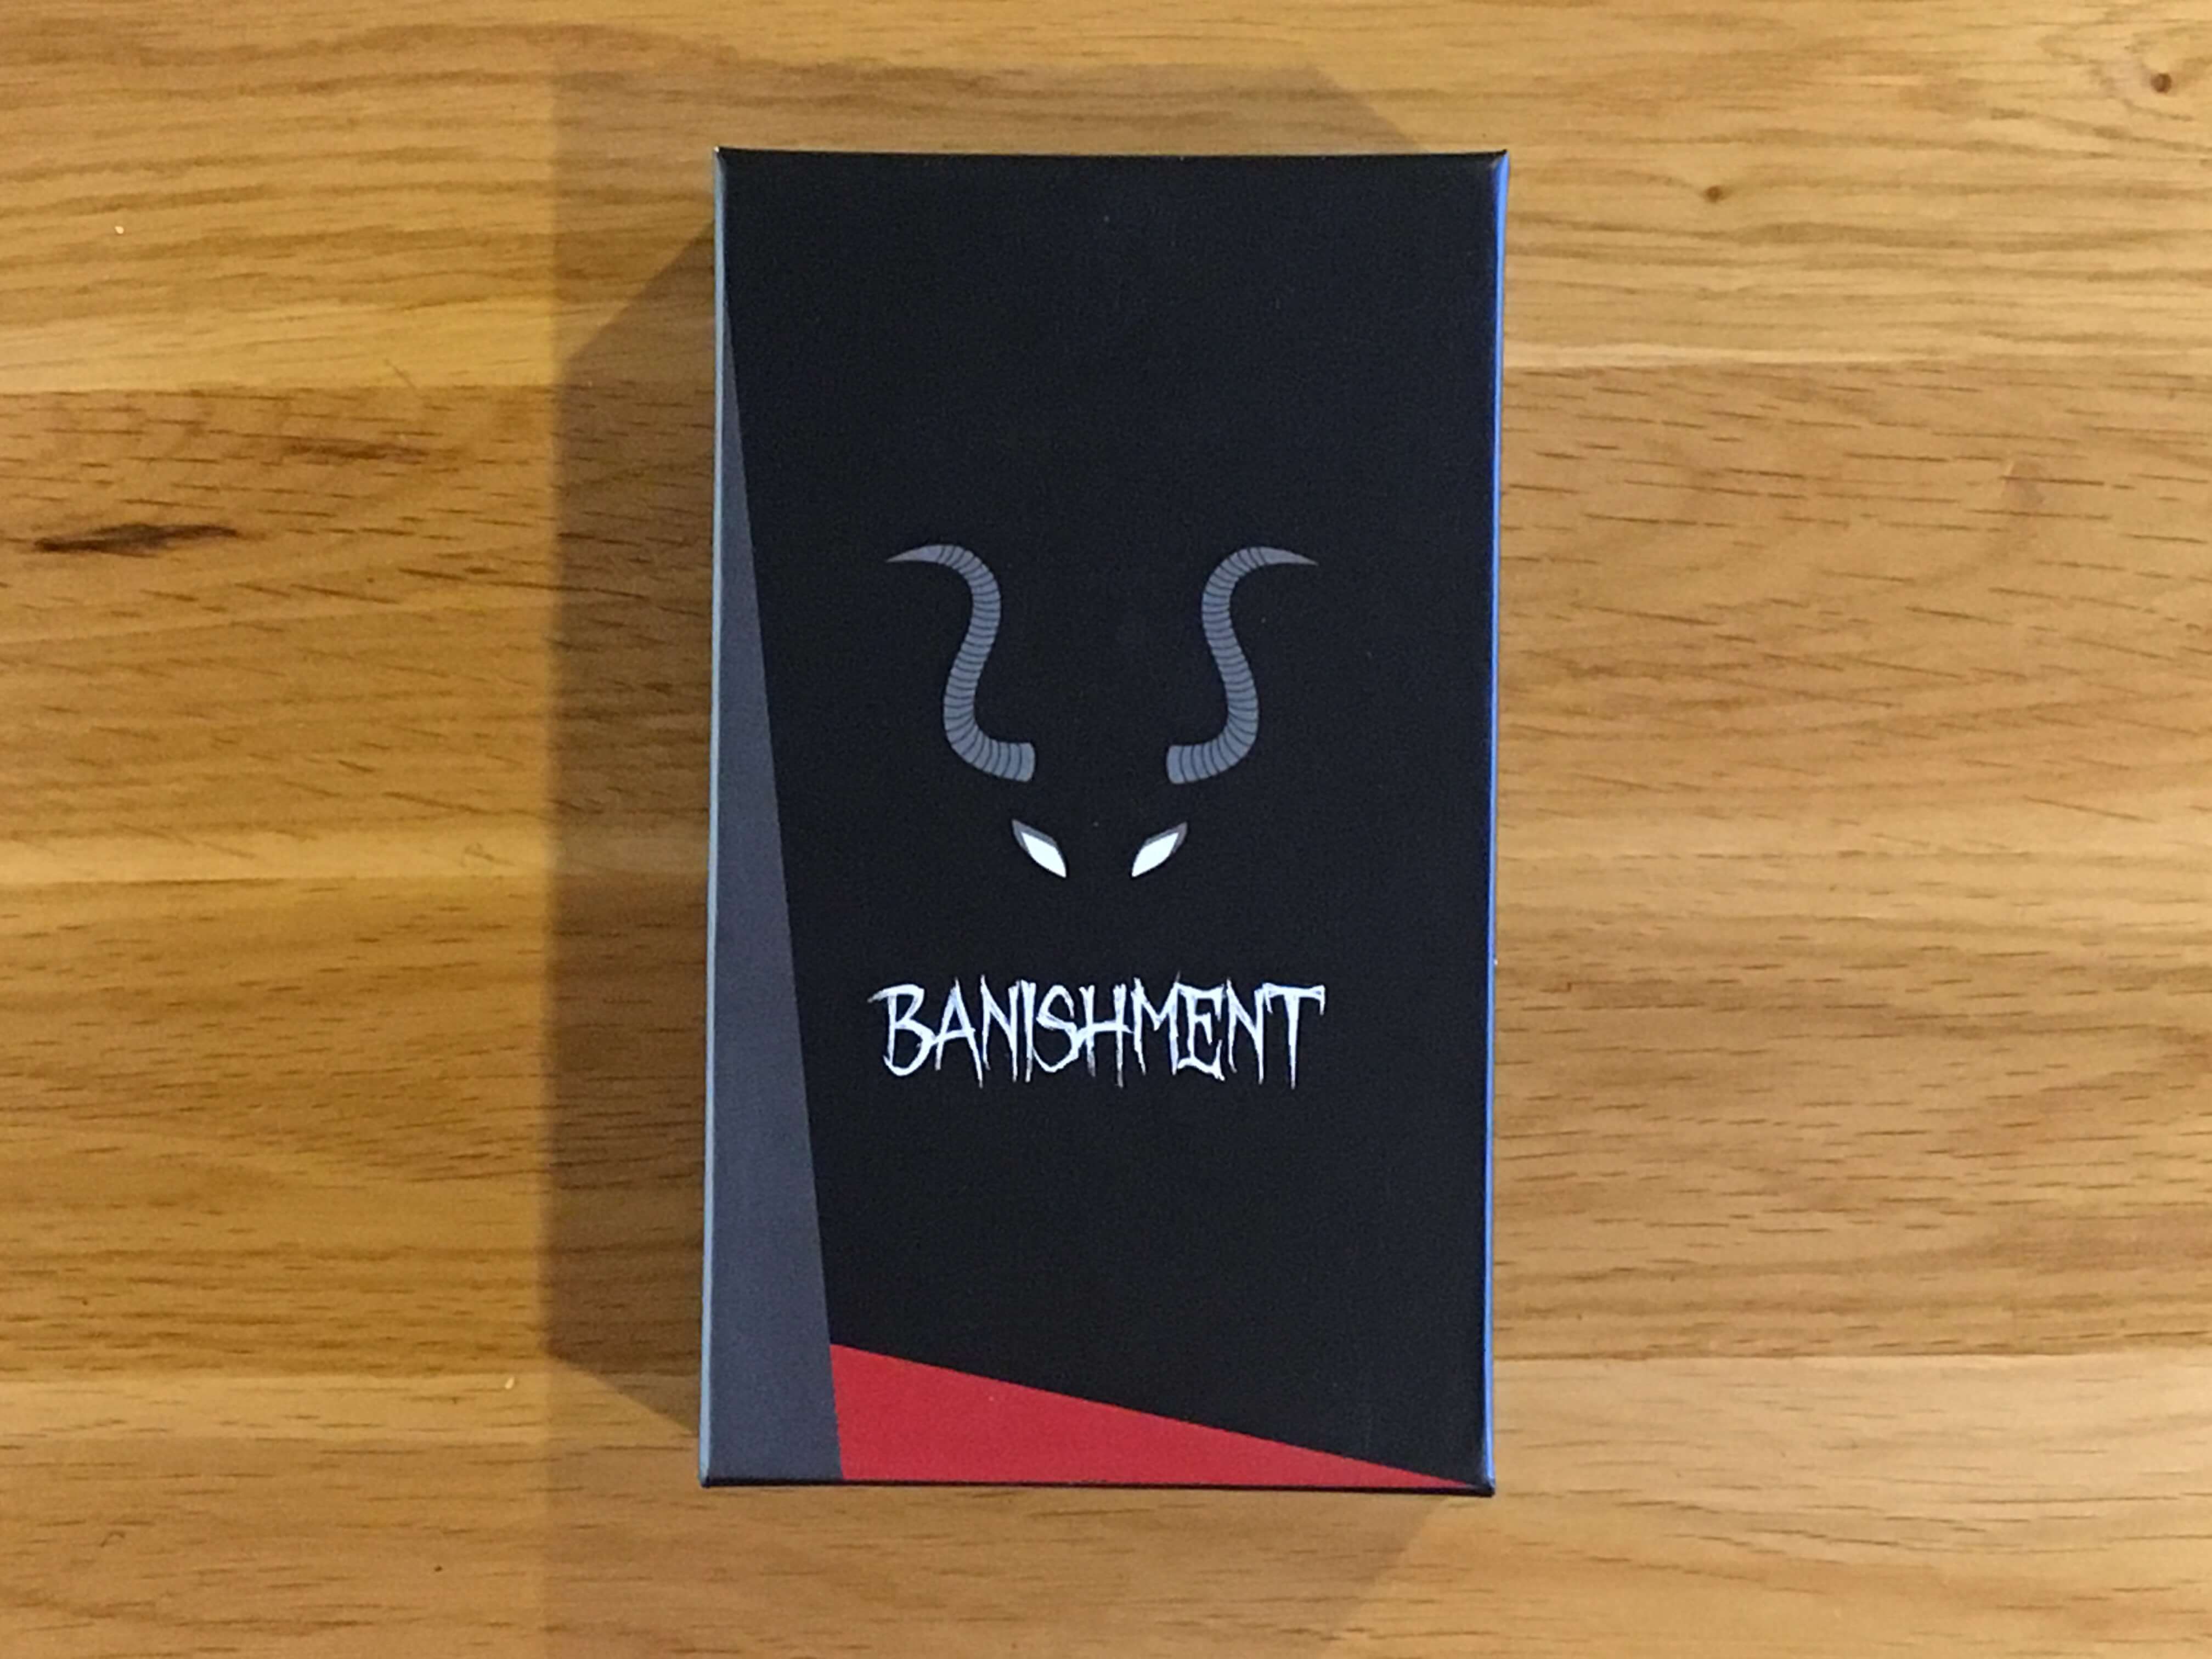 Banishment